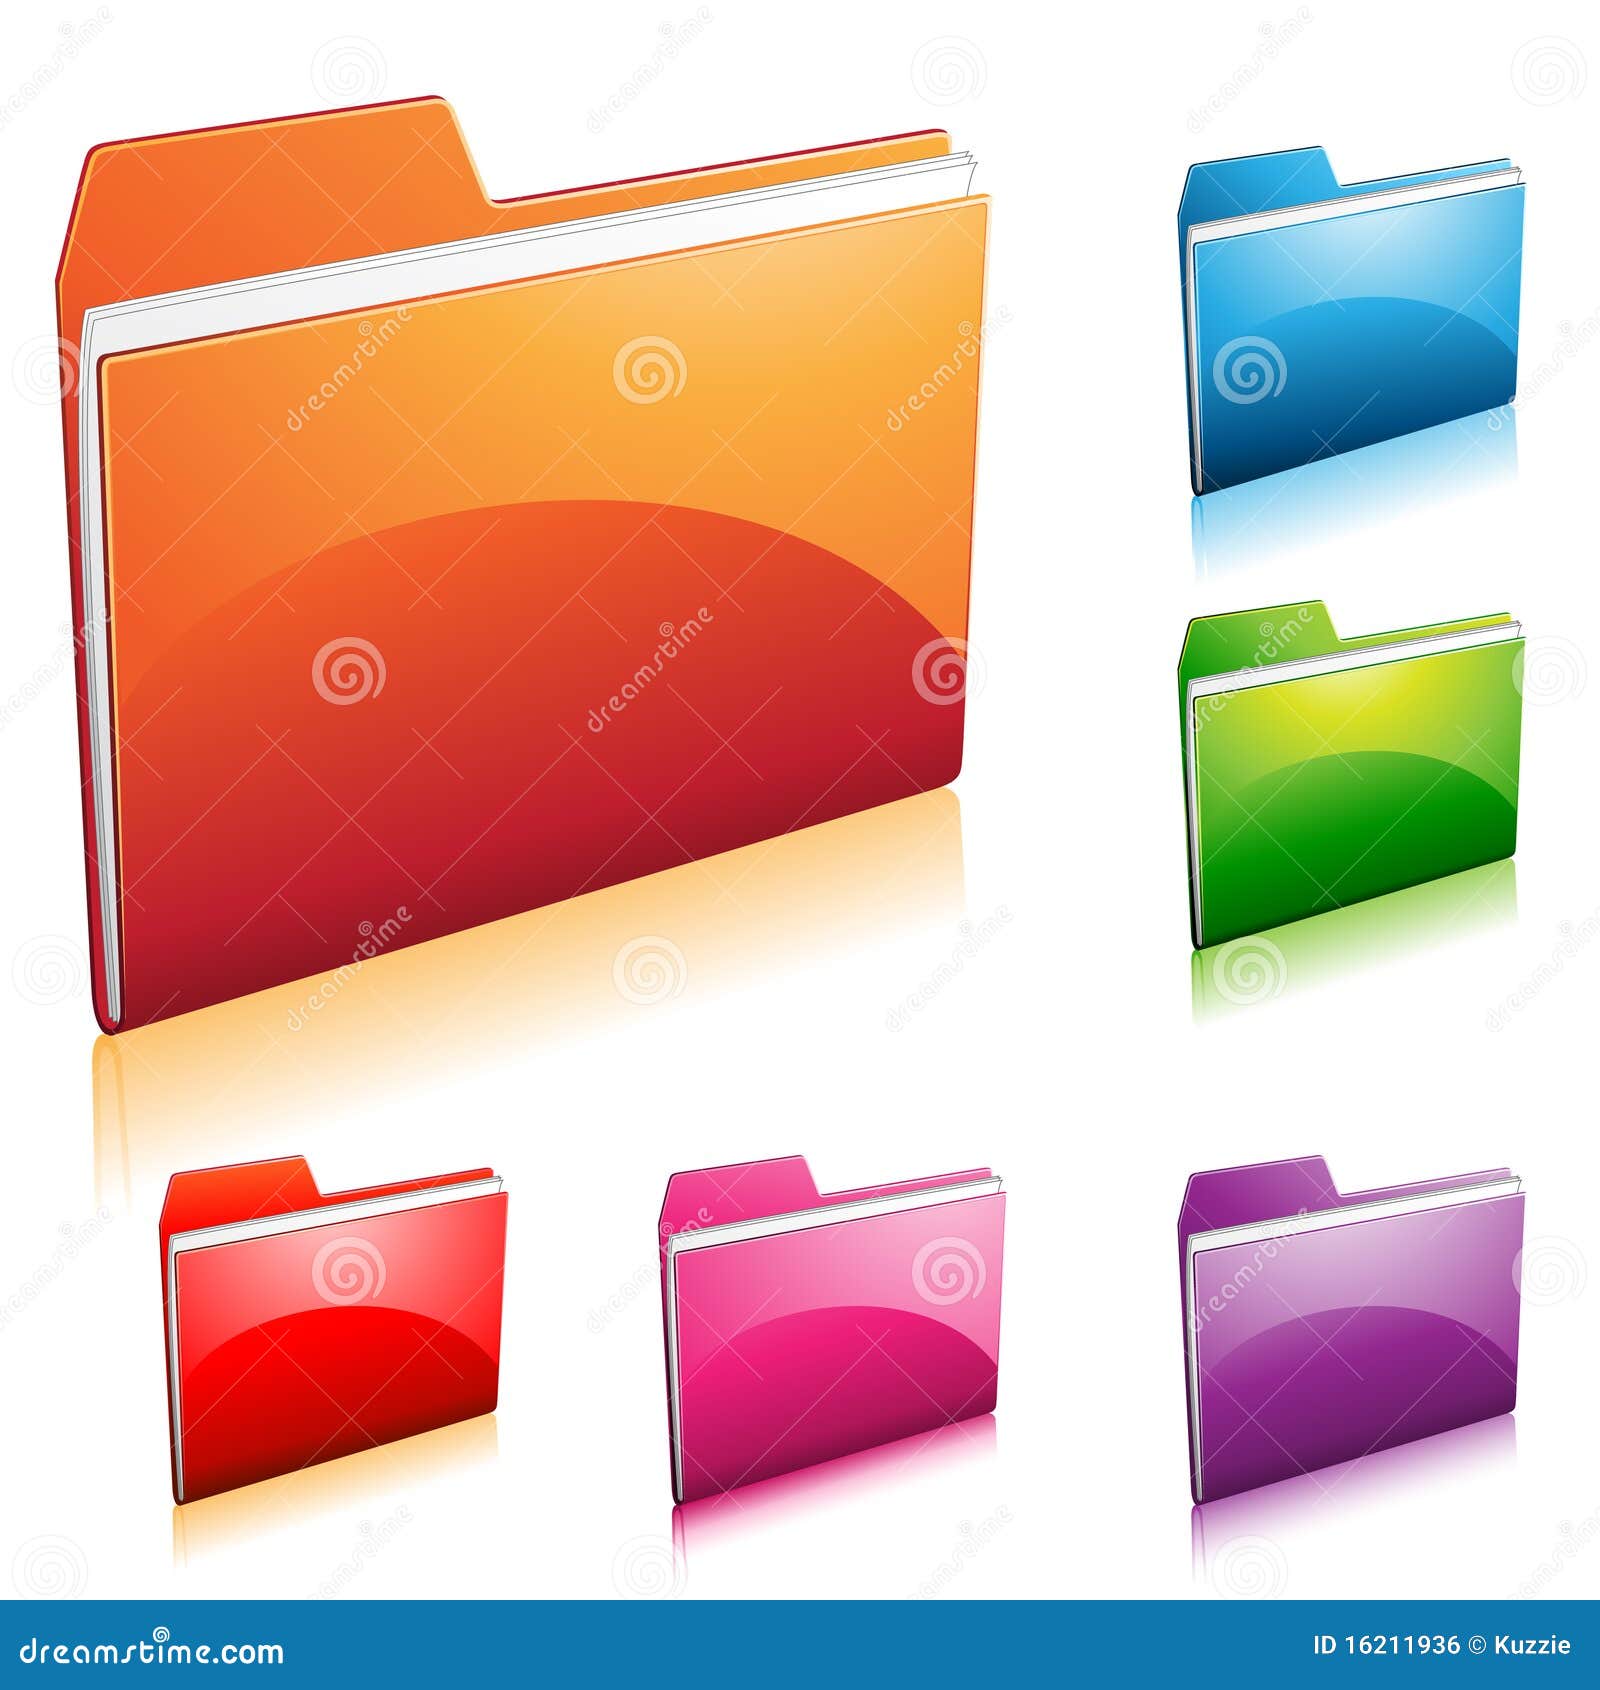 folder icon red